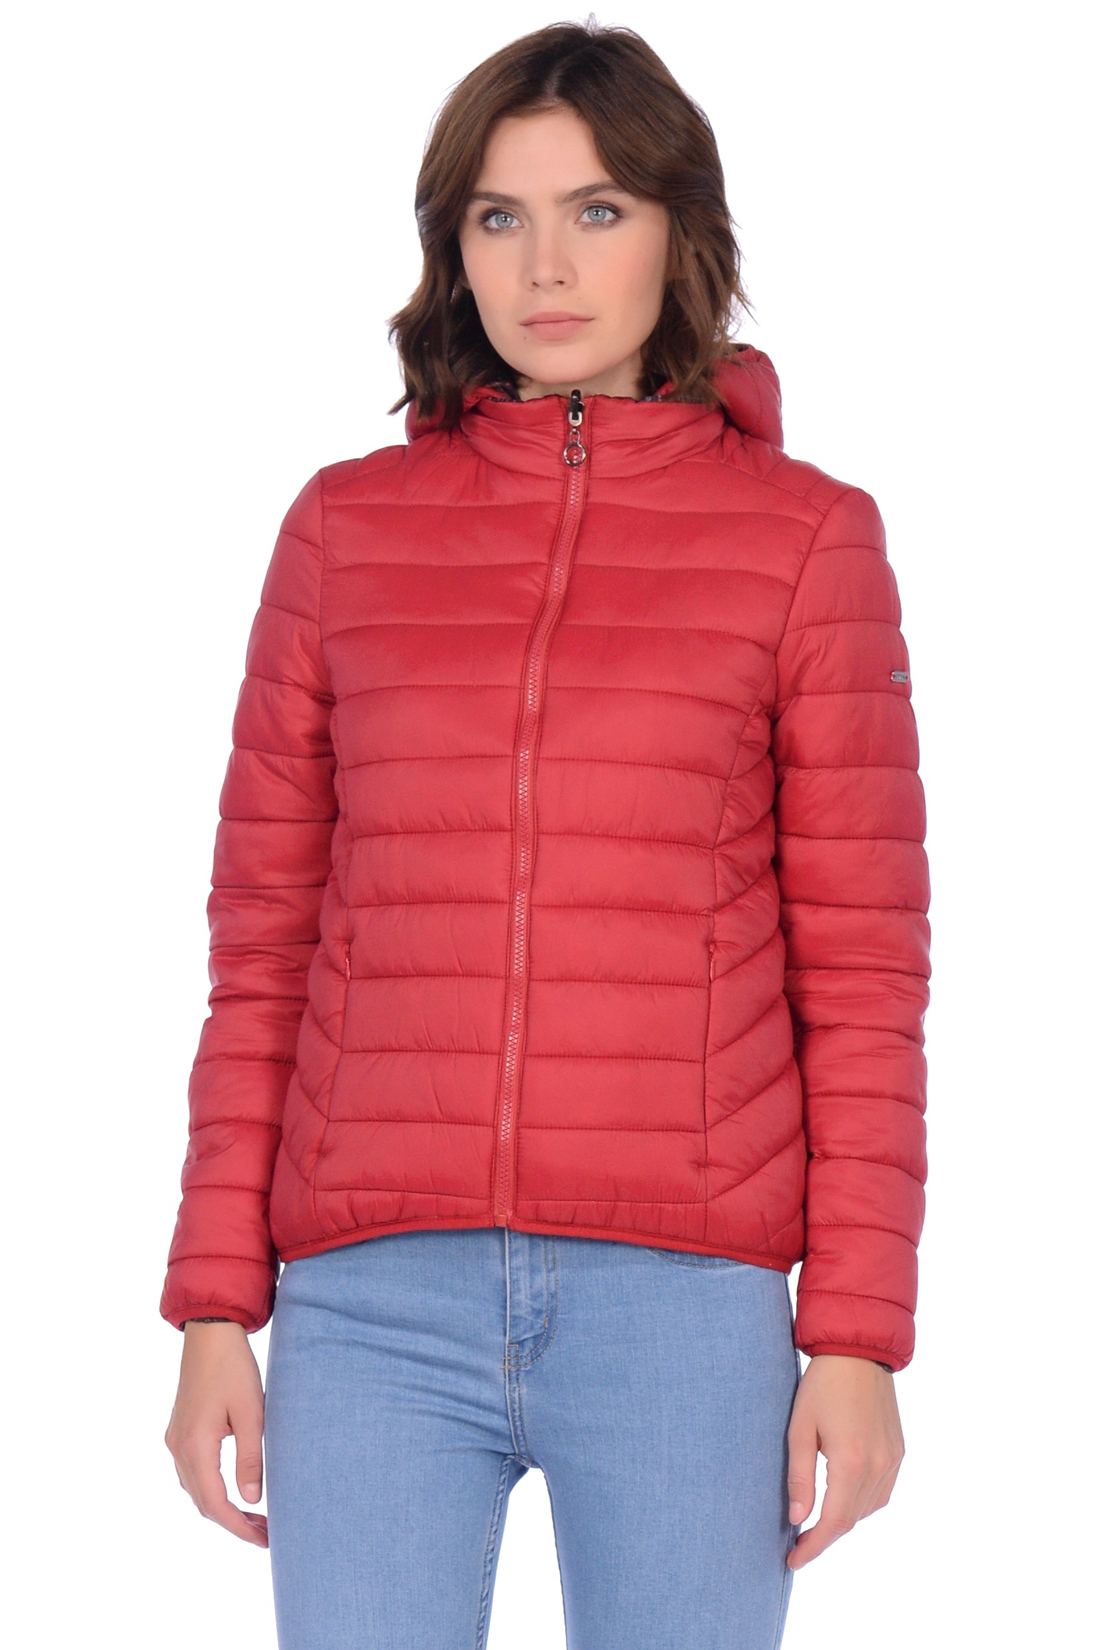 Двухстороняя куртка (арт. baon B039550), размер M, цвет красный Двухстороняя куртка (арт. baon B039550) - фото 1